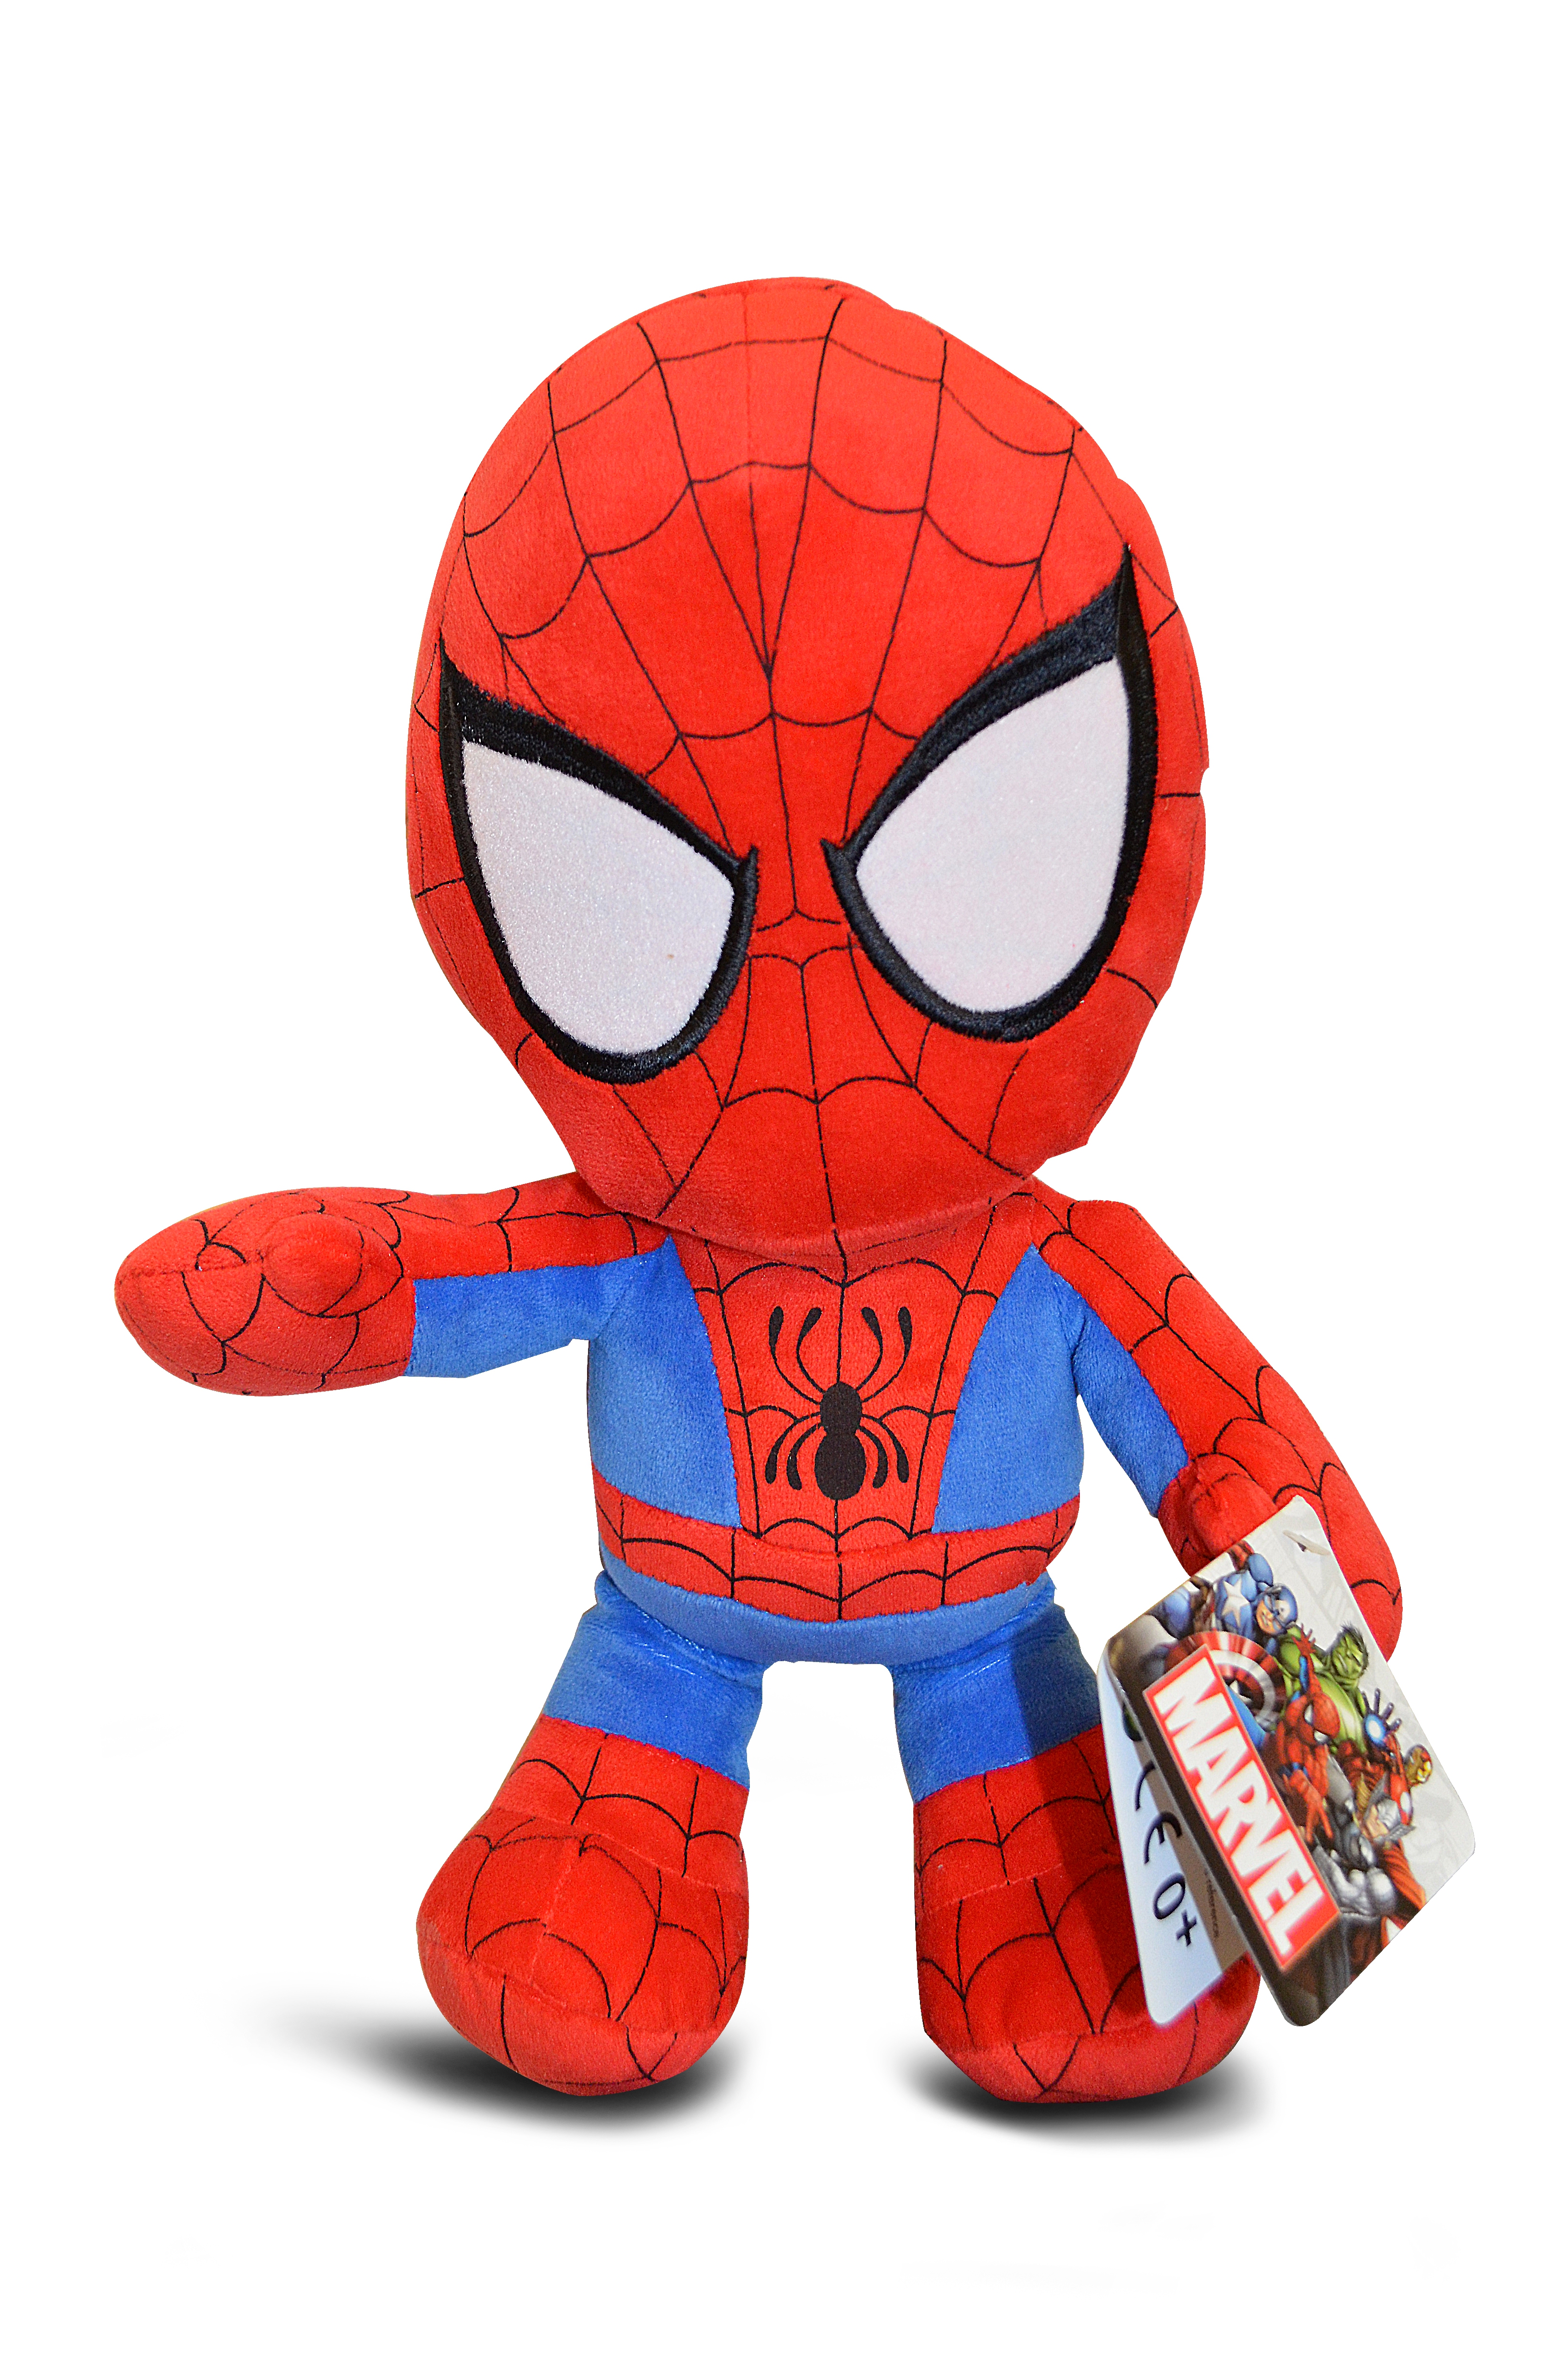 Marvel Superheroes 'Spiderman' 12 inch Plush Soft Toy